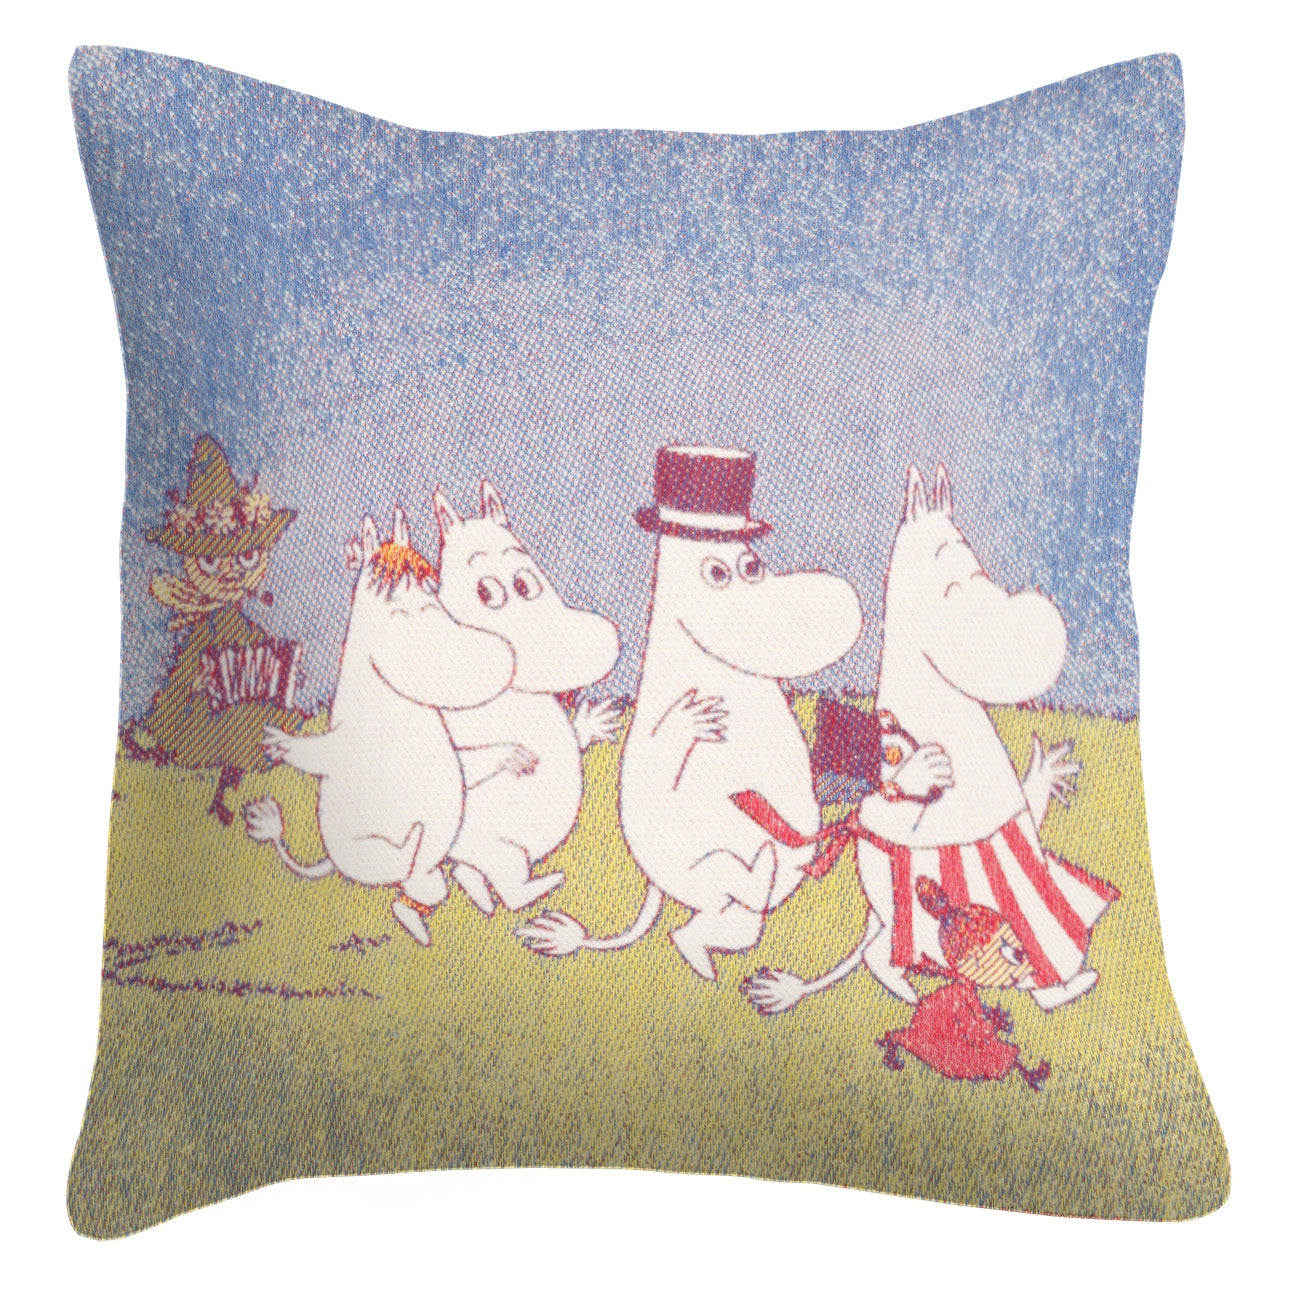 Moomin cushion / pillow cover 40x40 cm Moomin House